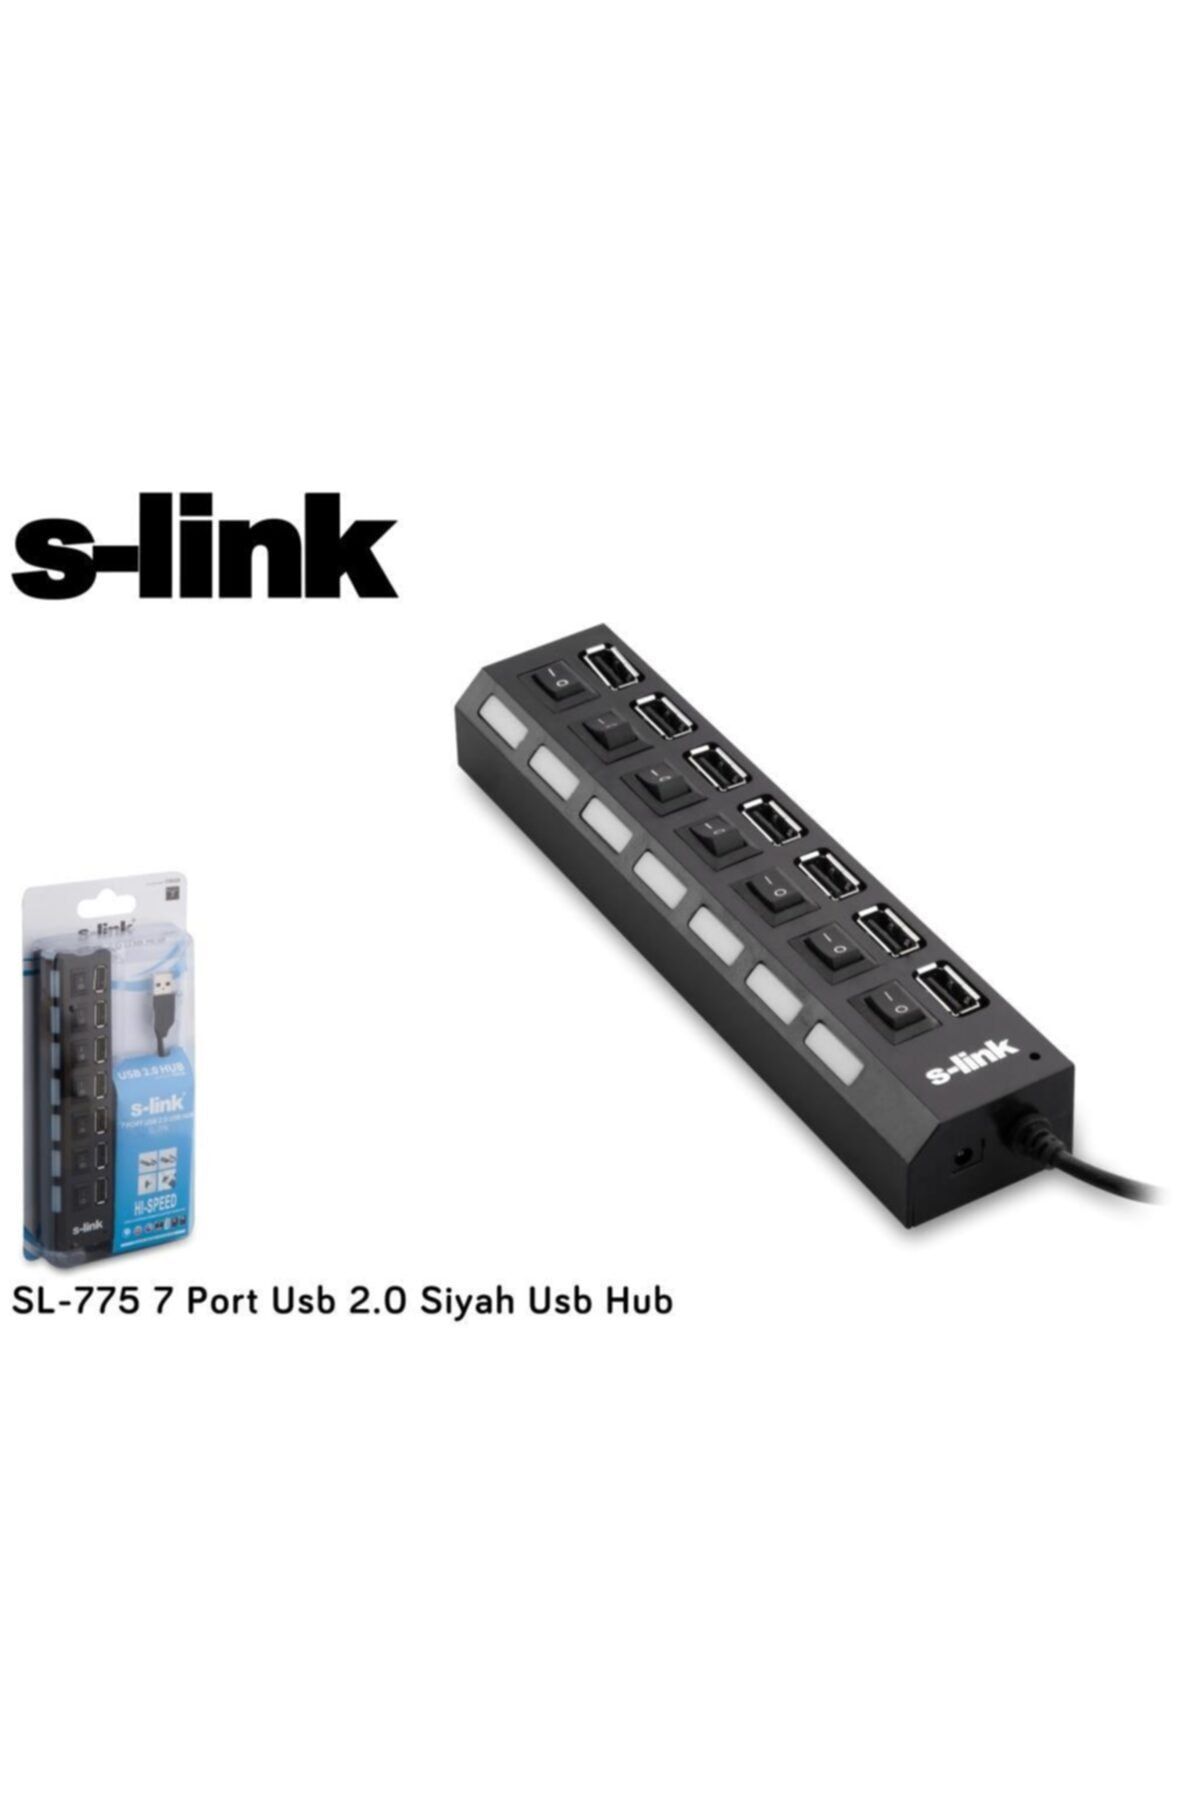 S-Link 7 Port Usb 2.0 Siyah Usb Hub Sl-775